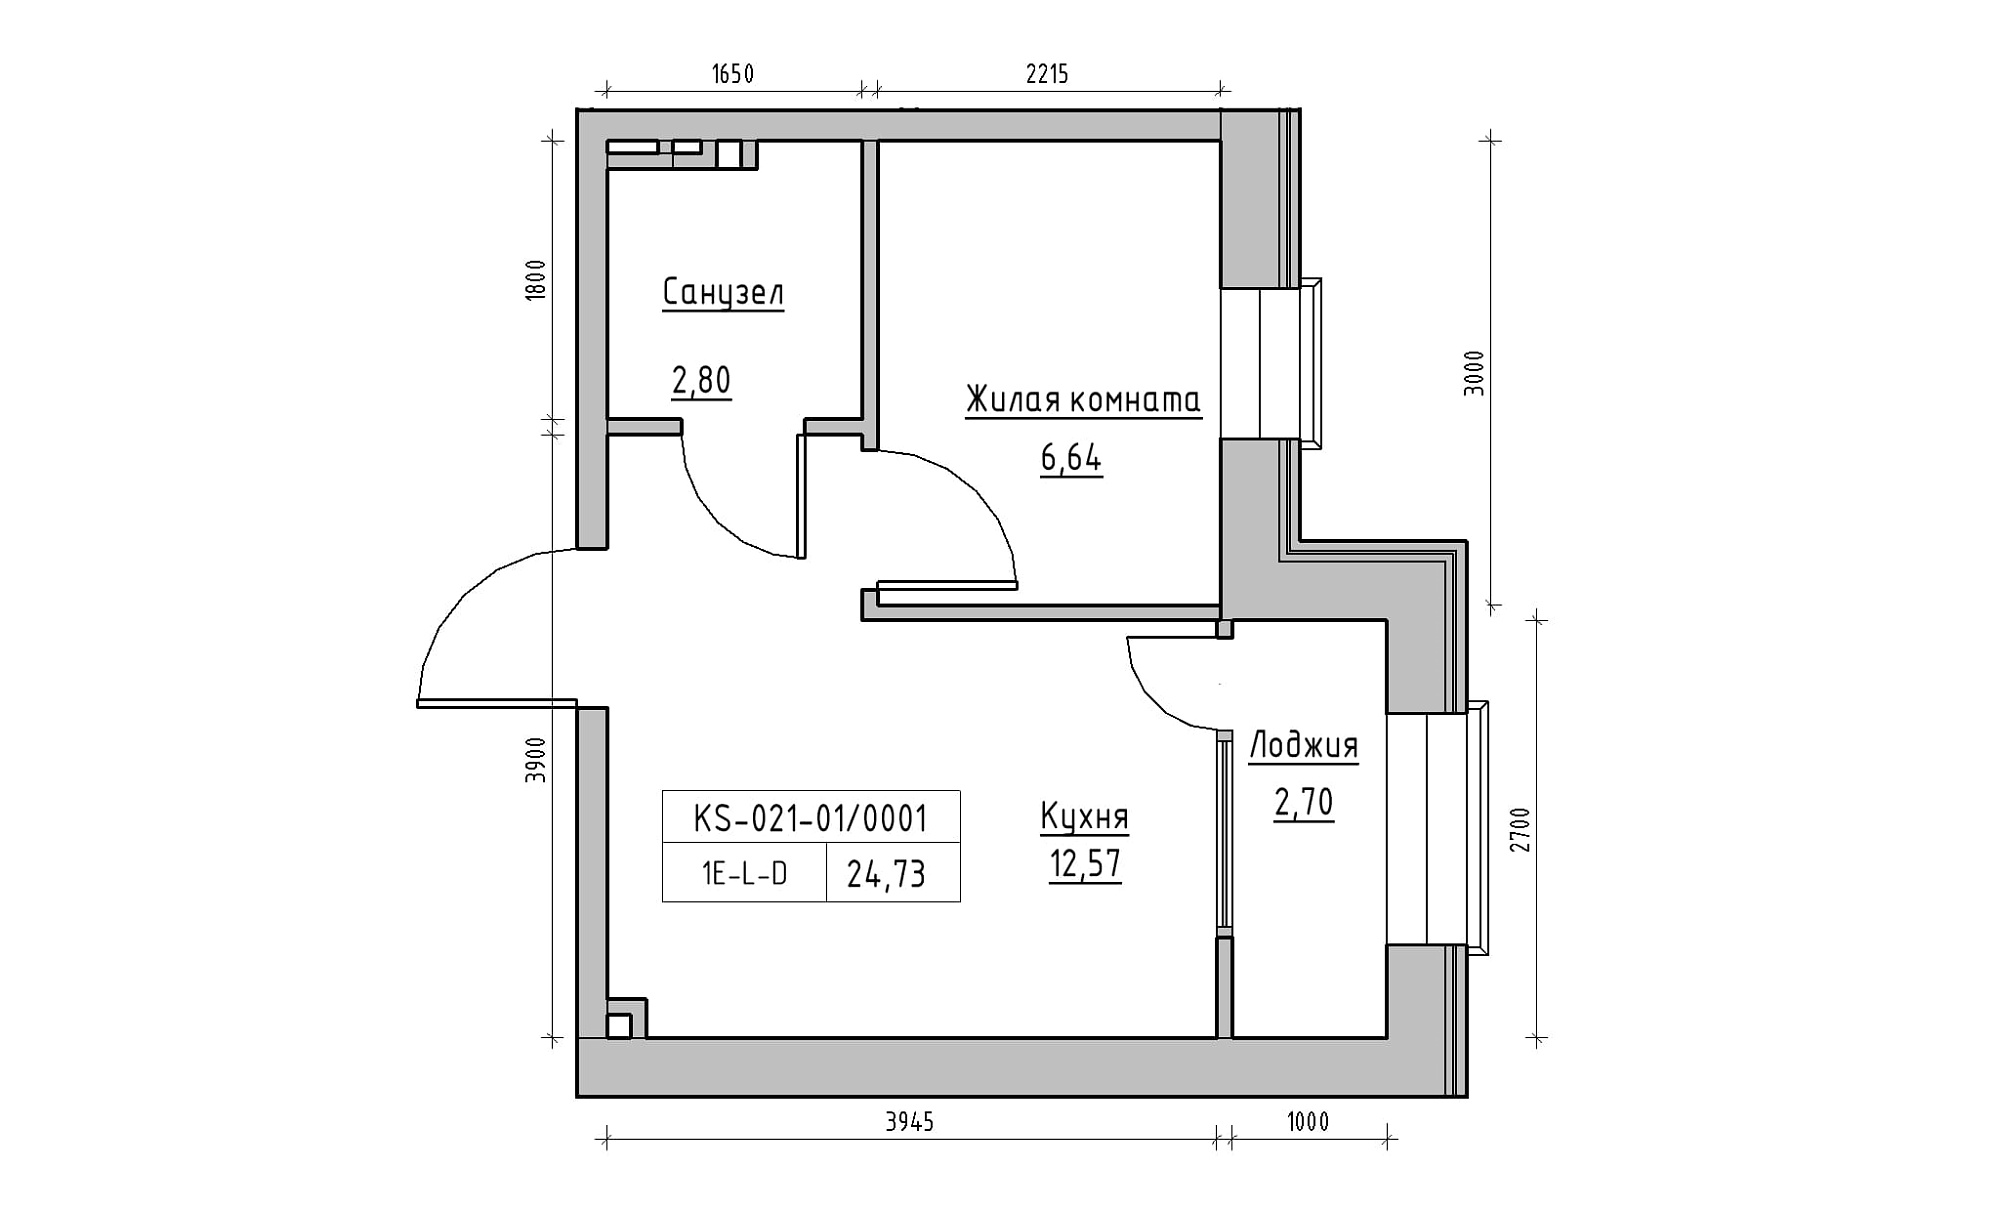 Planning 1-rm flats area 24.73m2, KS-021-01/0001.